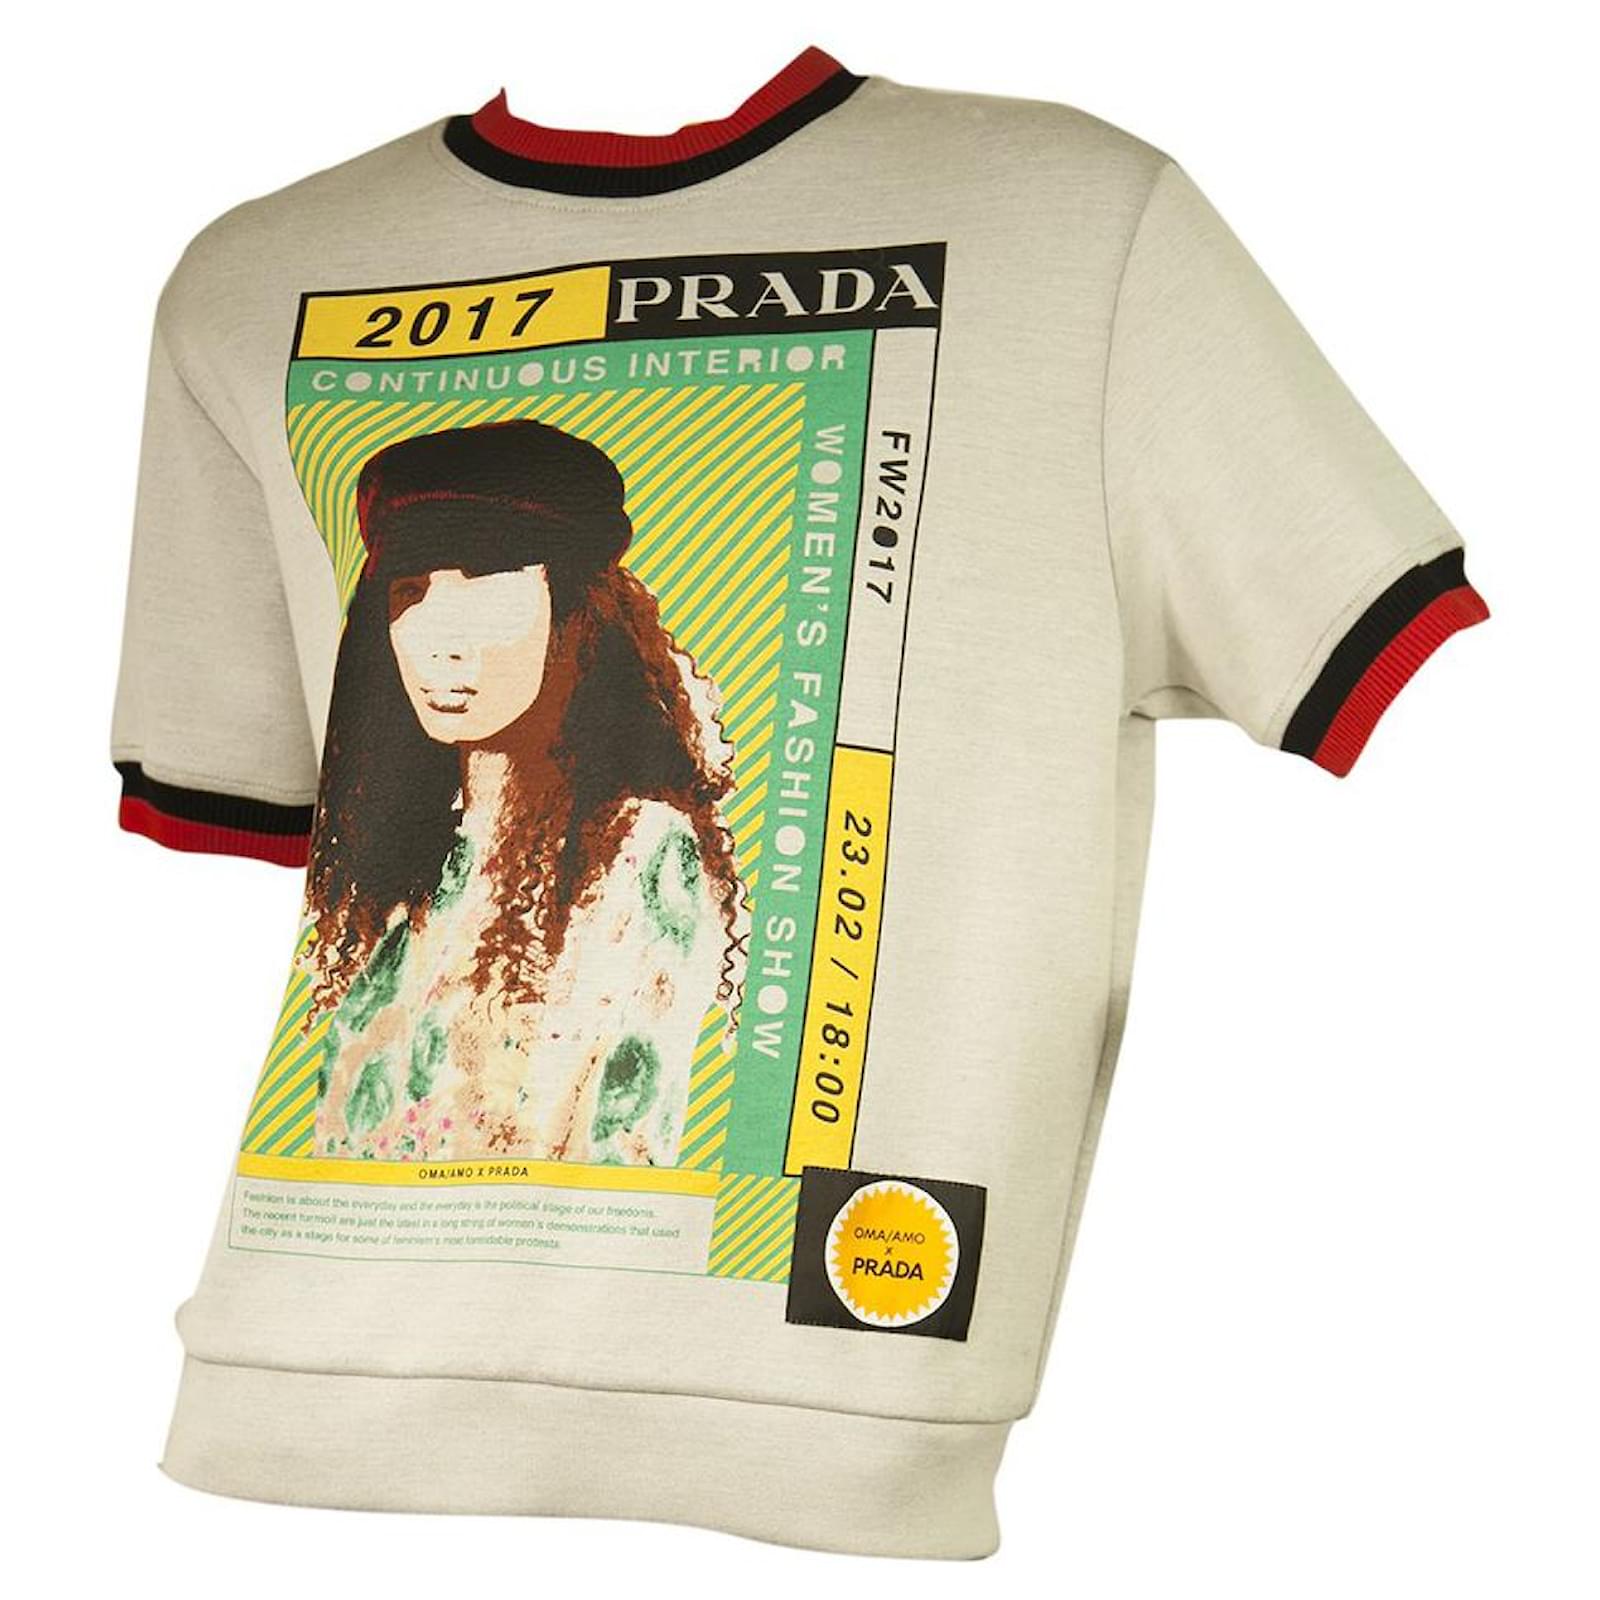 I'm Prada You're Nada shirt summer shirt Tote Bag for Sale by SheMayKeL  Design